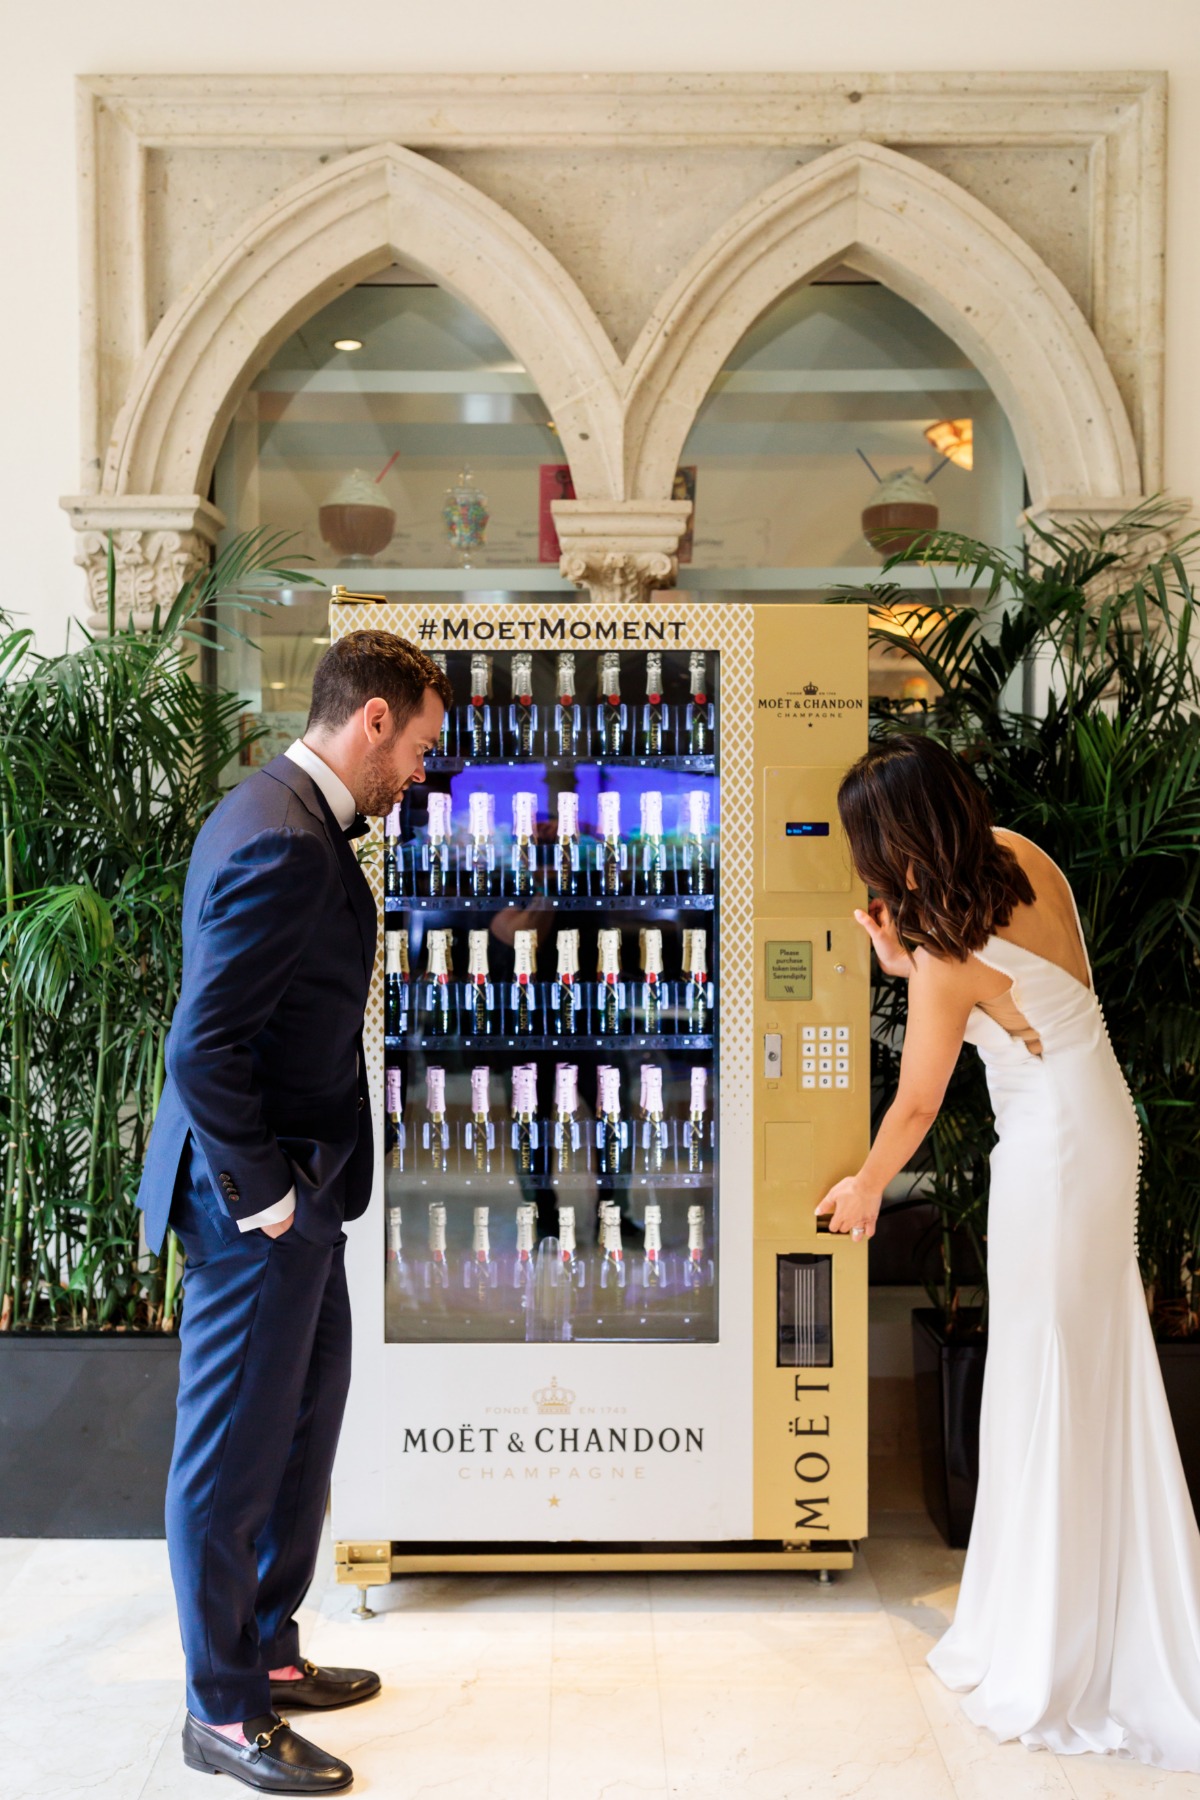 Moet & Chandon Champange vending machine